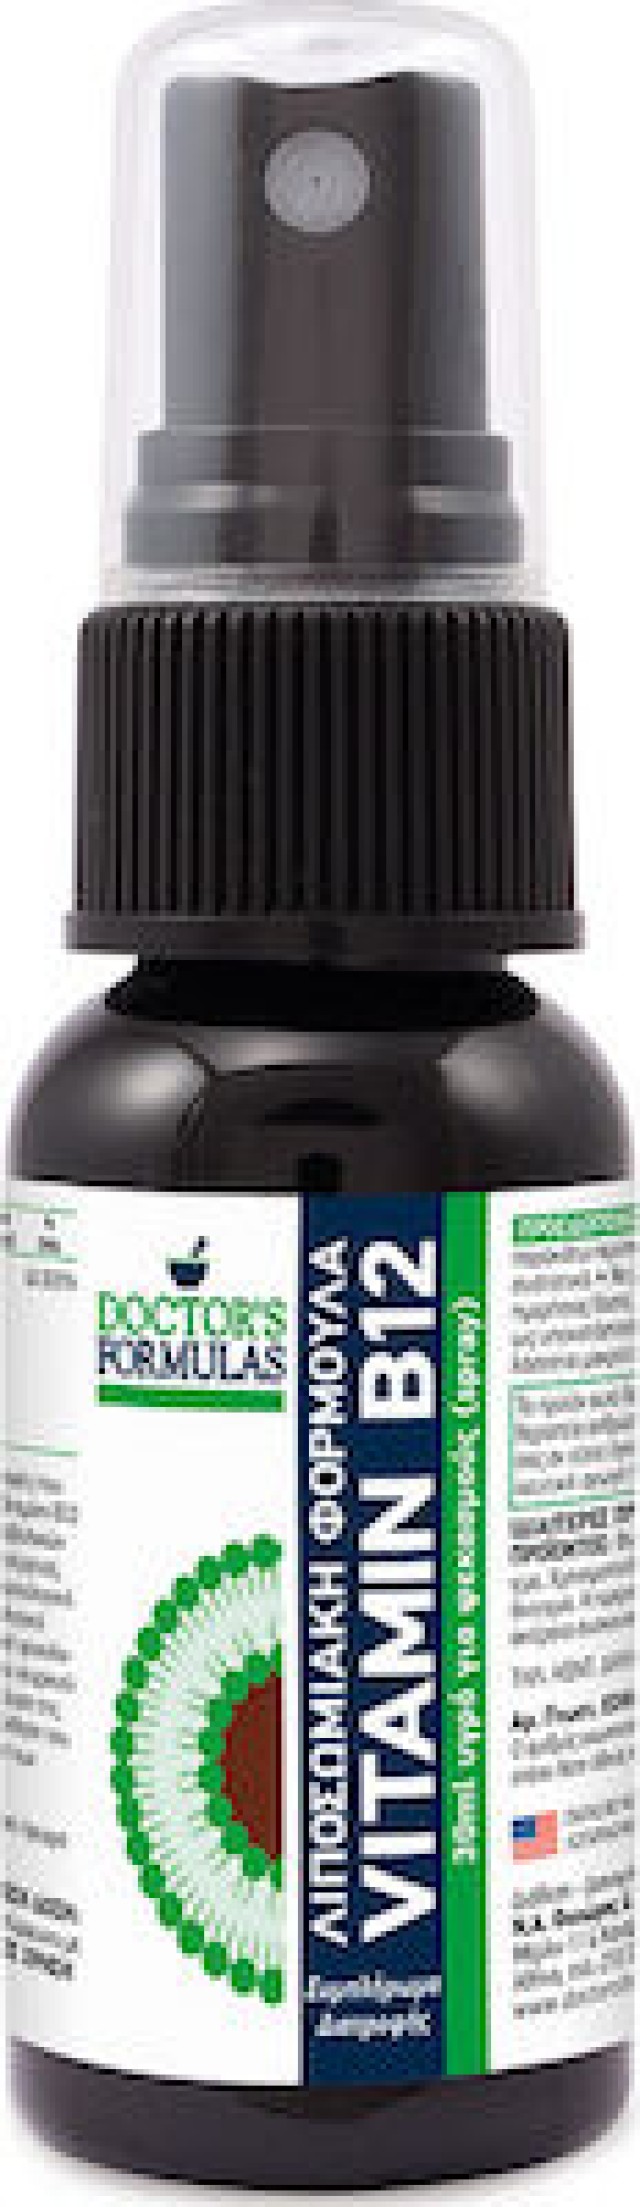 Doctors Formulas Vitamin B12 Spray 30ml